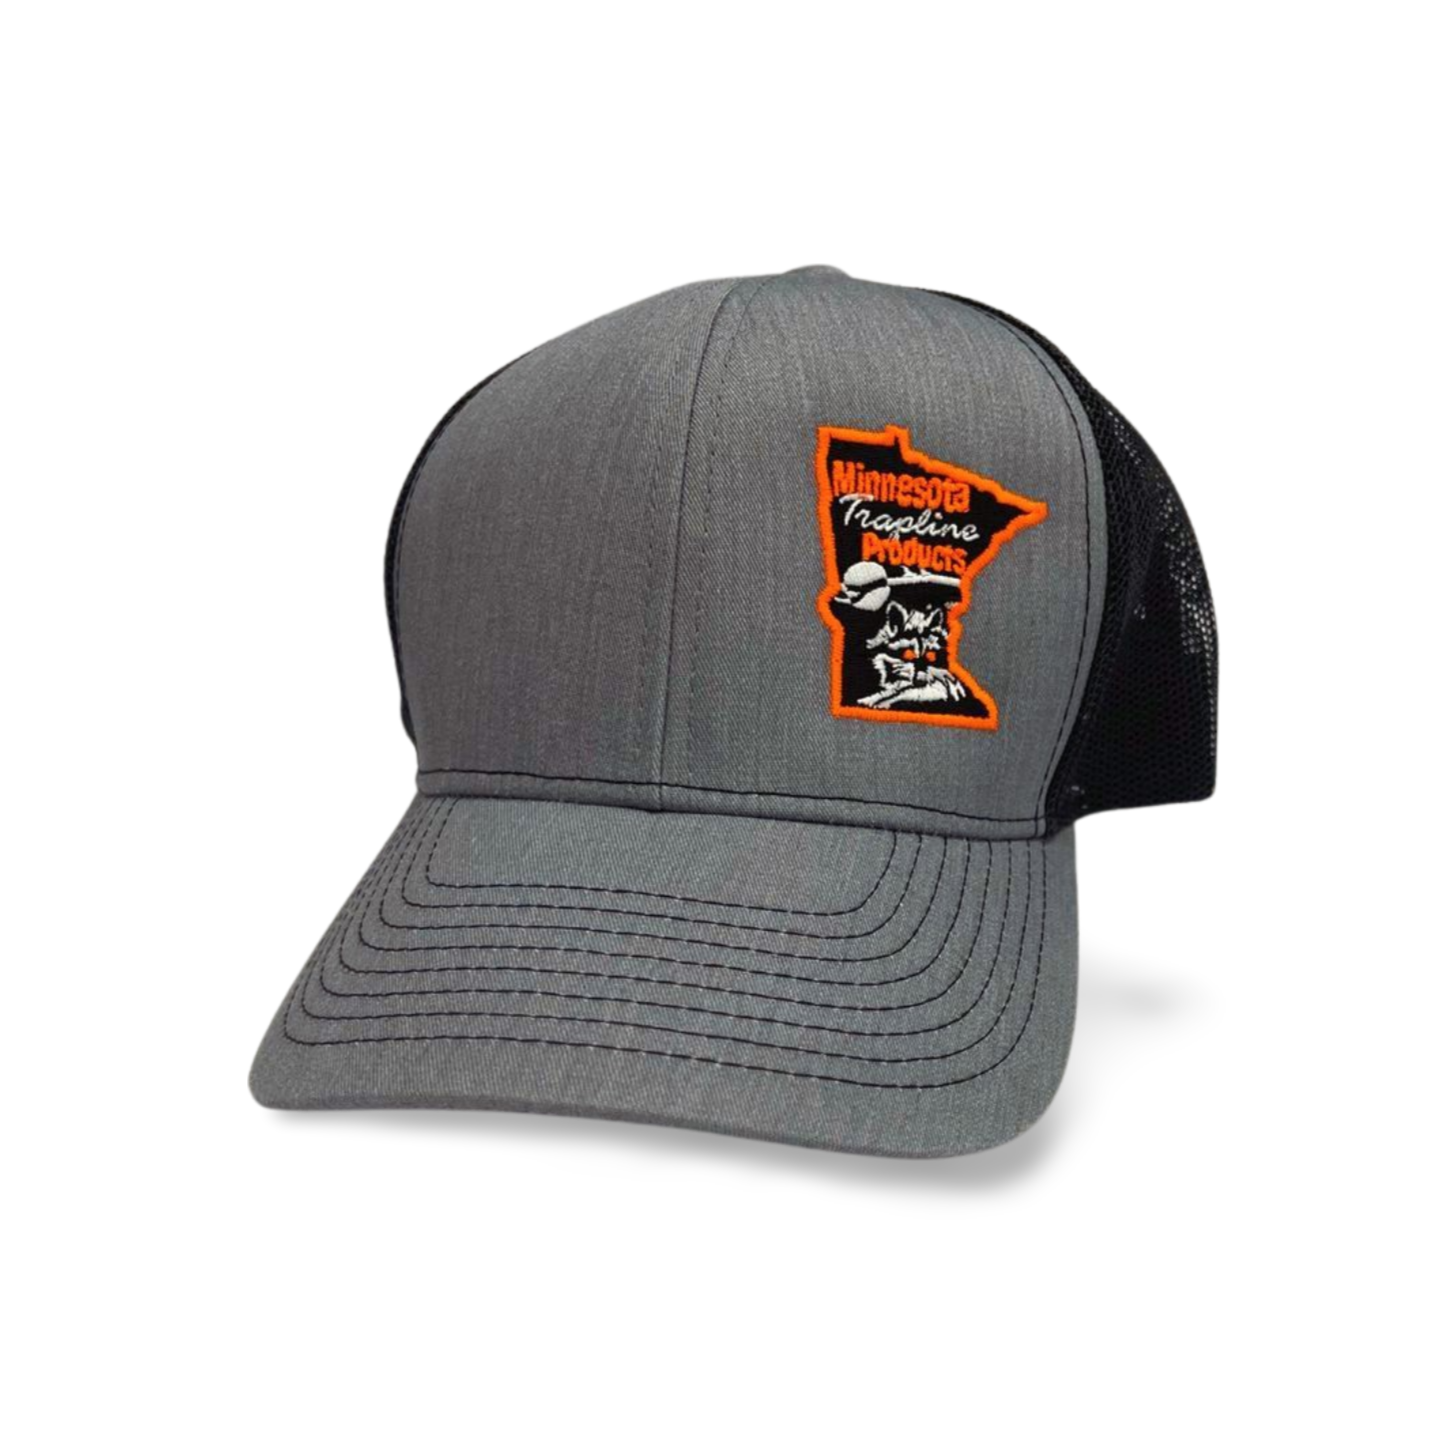 Minnesota Trapline Trucker Hat - Gray and Black